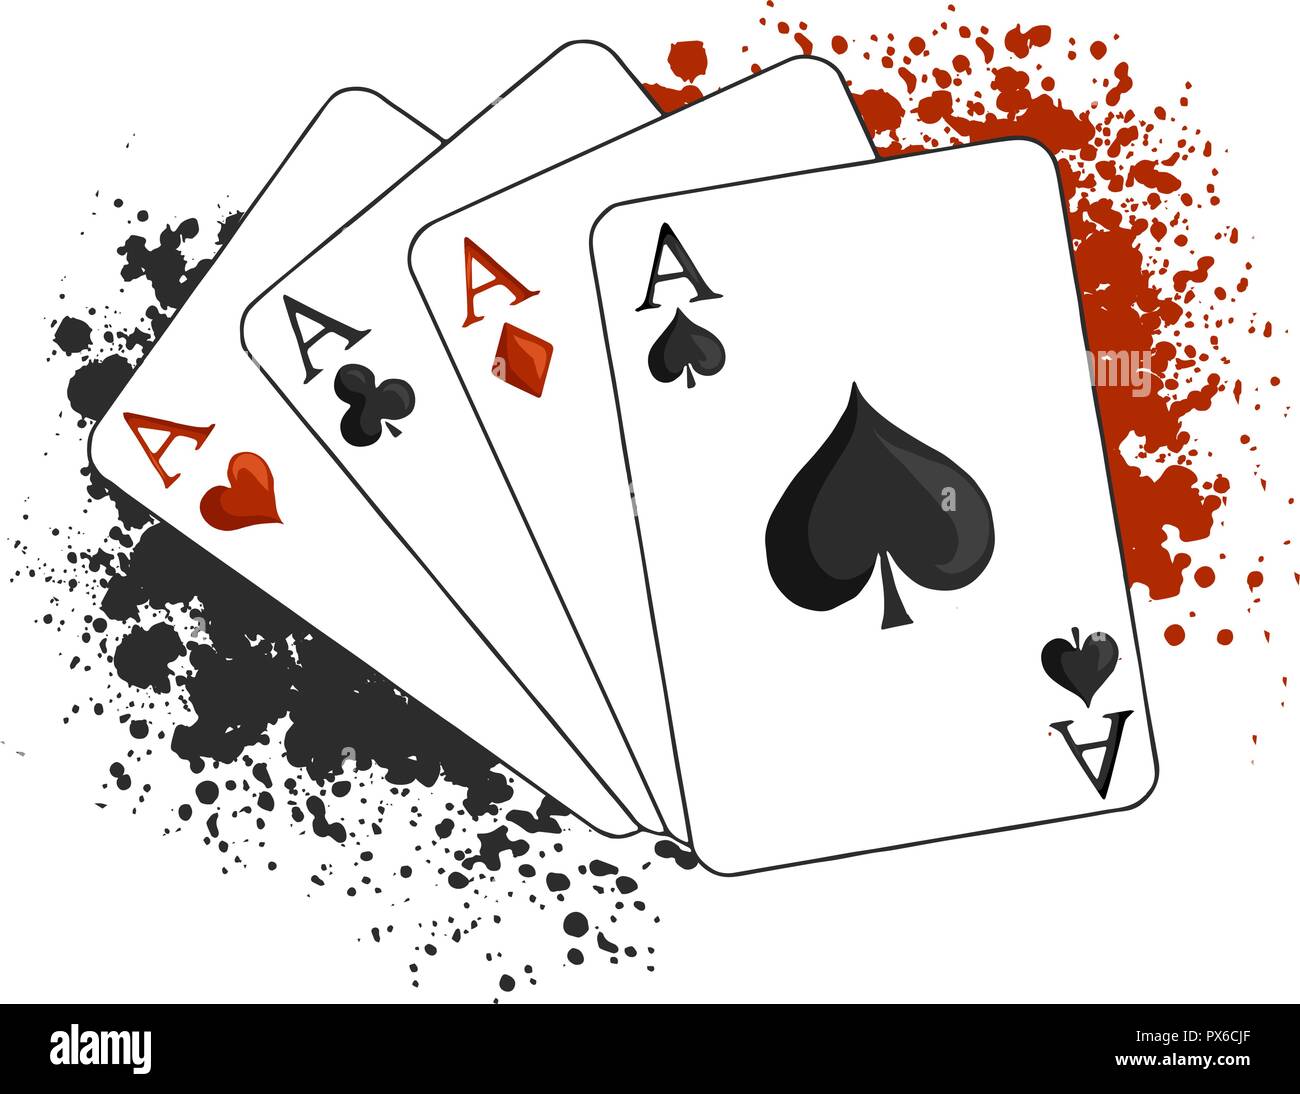 Dibujar poker Imágenes vectoriales de stock - Alamy